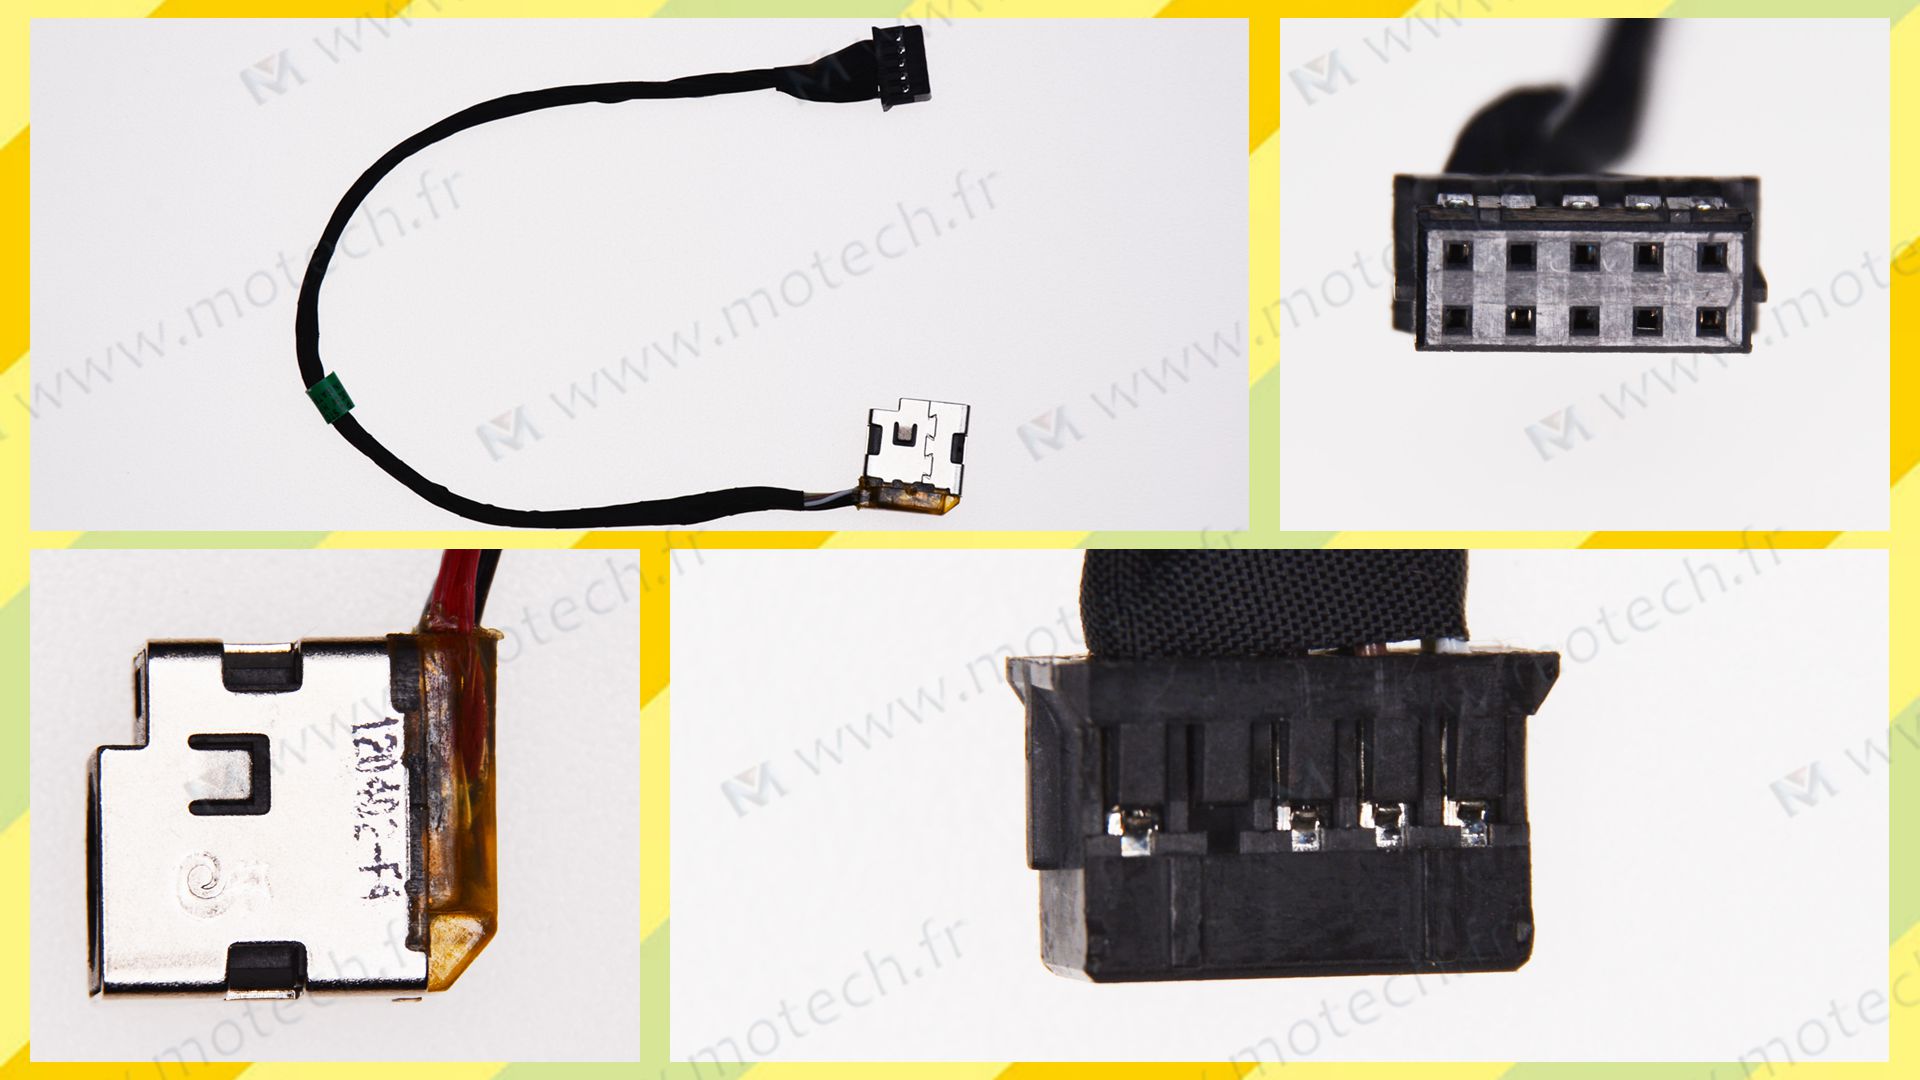 HP CQ58 charging connector, HP CQ58 DC Power Jack, HP CQ58 DC IN Cable, HP CQ58 Power Jack, HP CQ58 plug, HP CQ58 Jack socket, HP CQ58 connecteur de charge, 